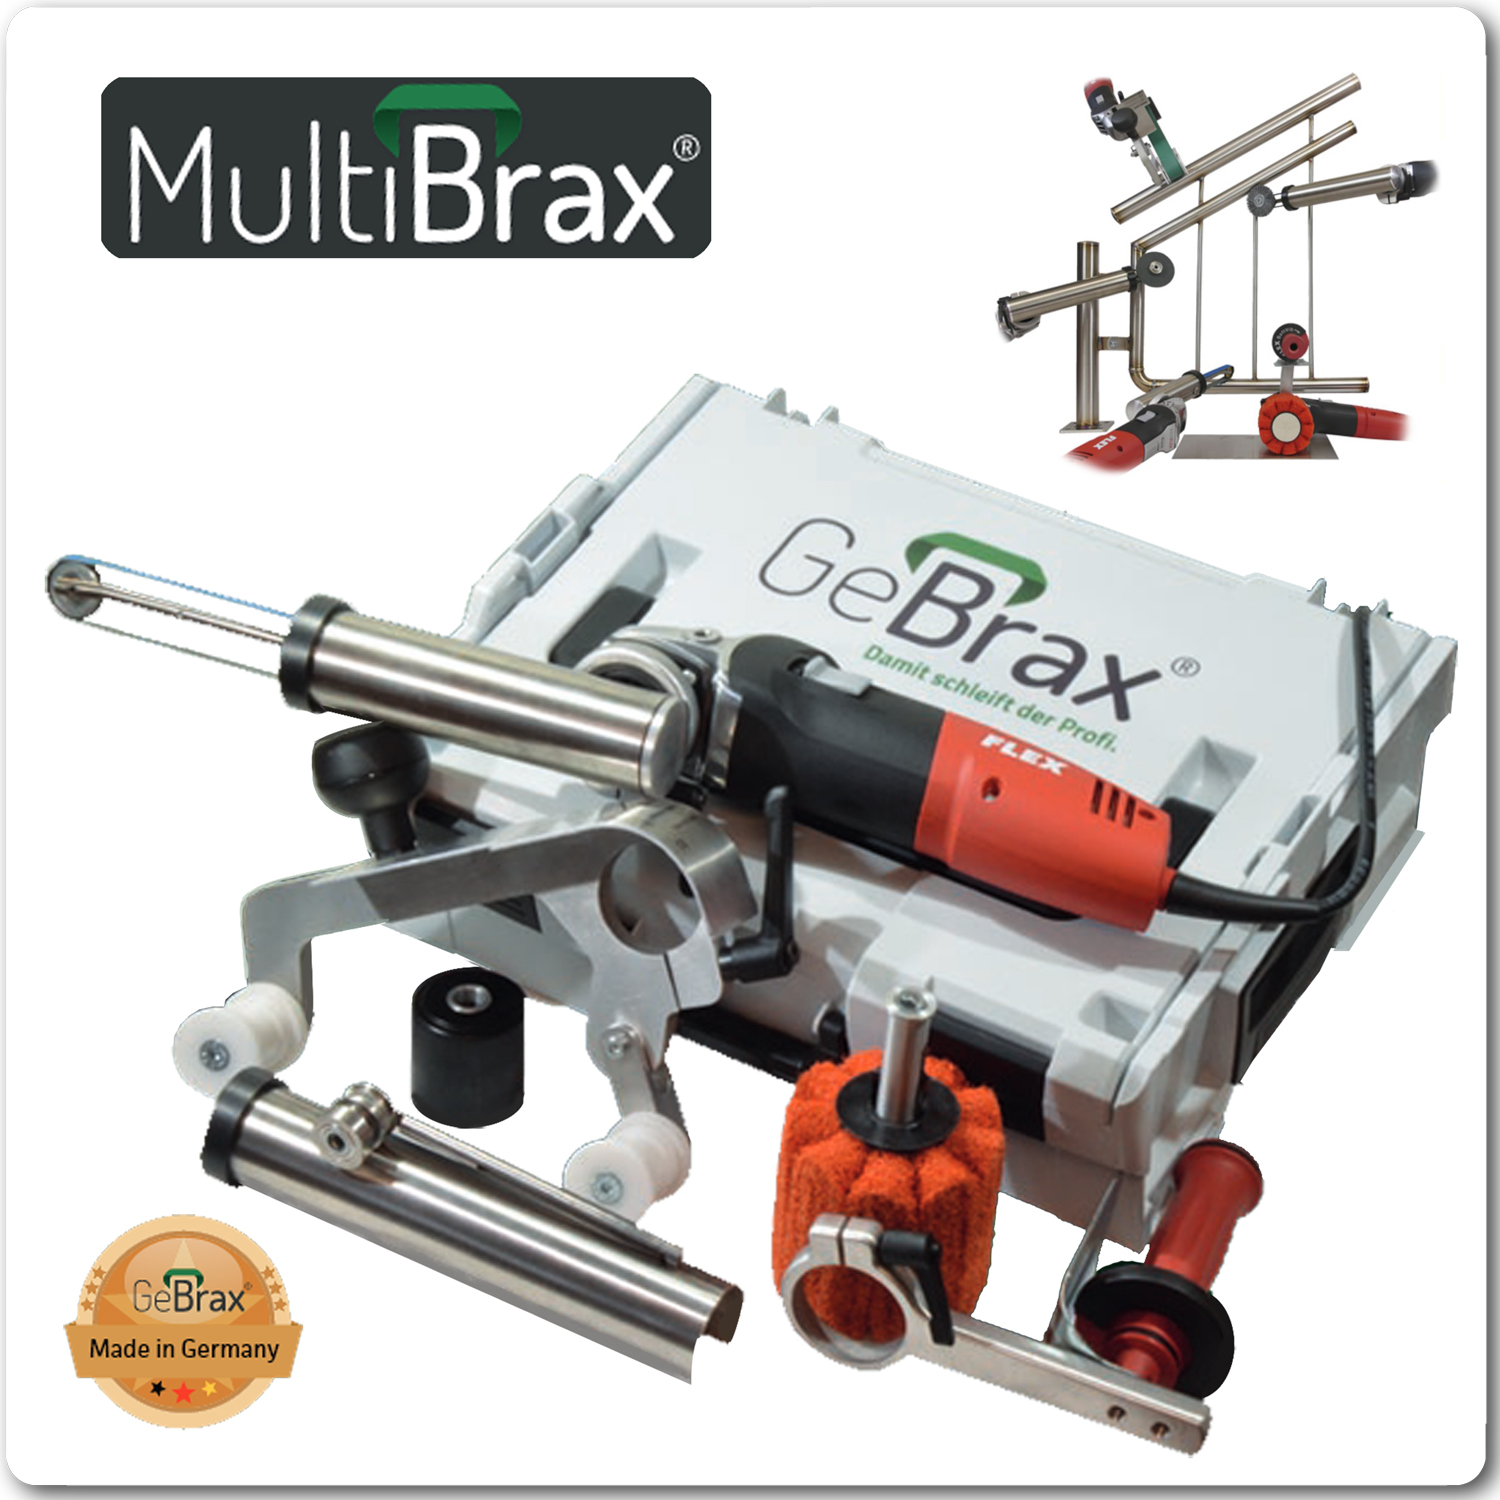 MultiBrax-10x10R-1500